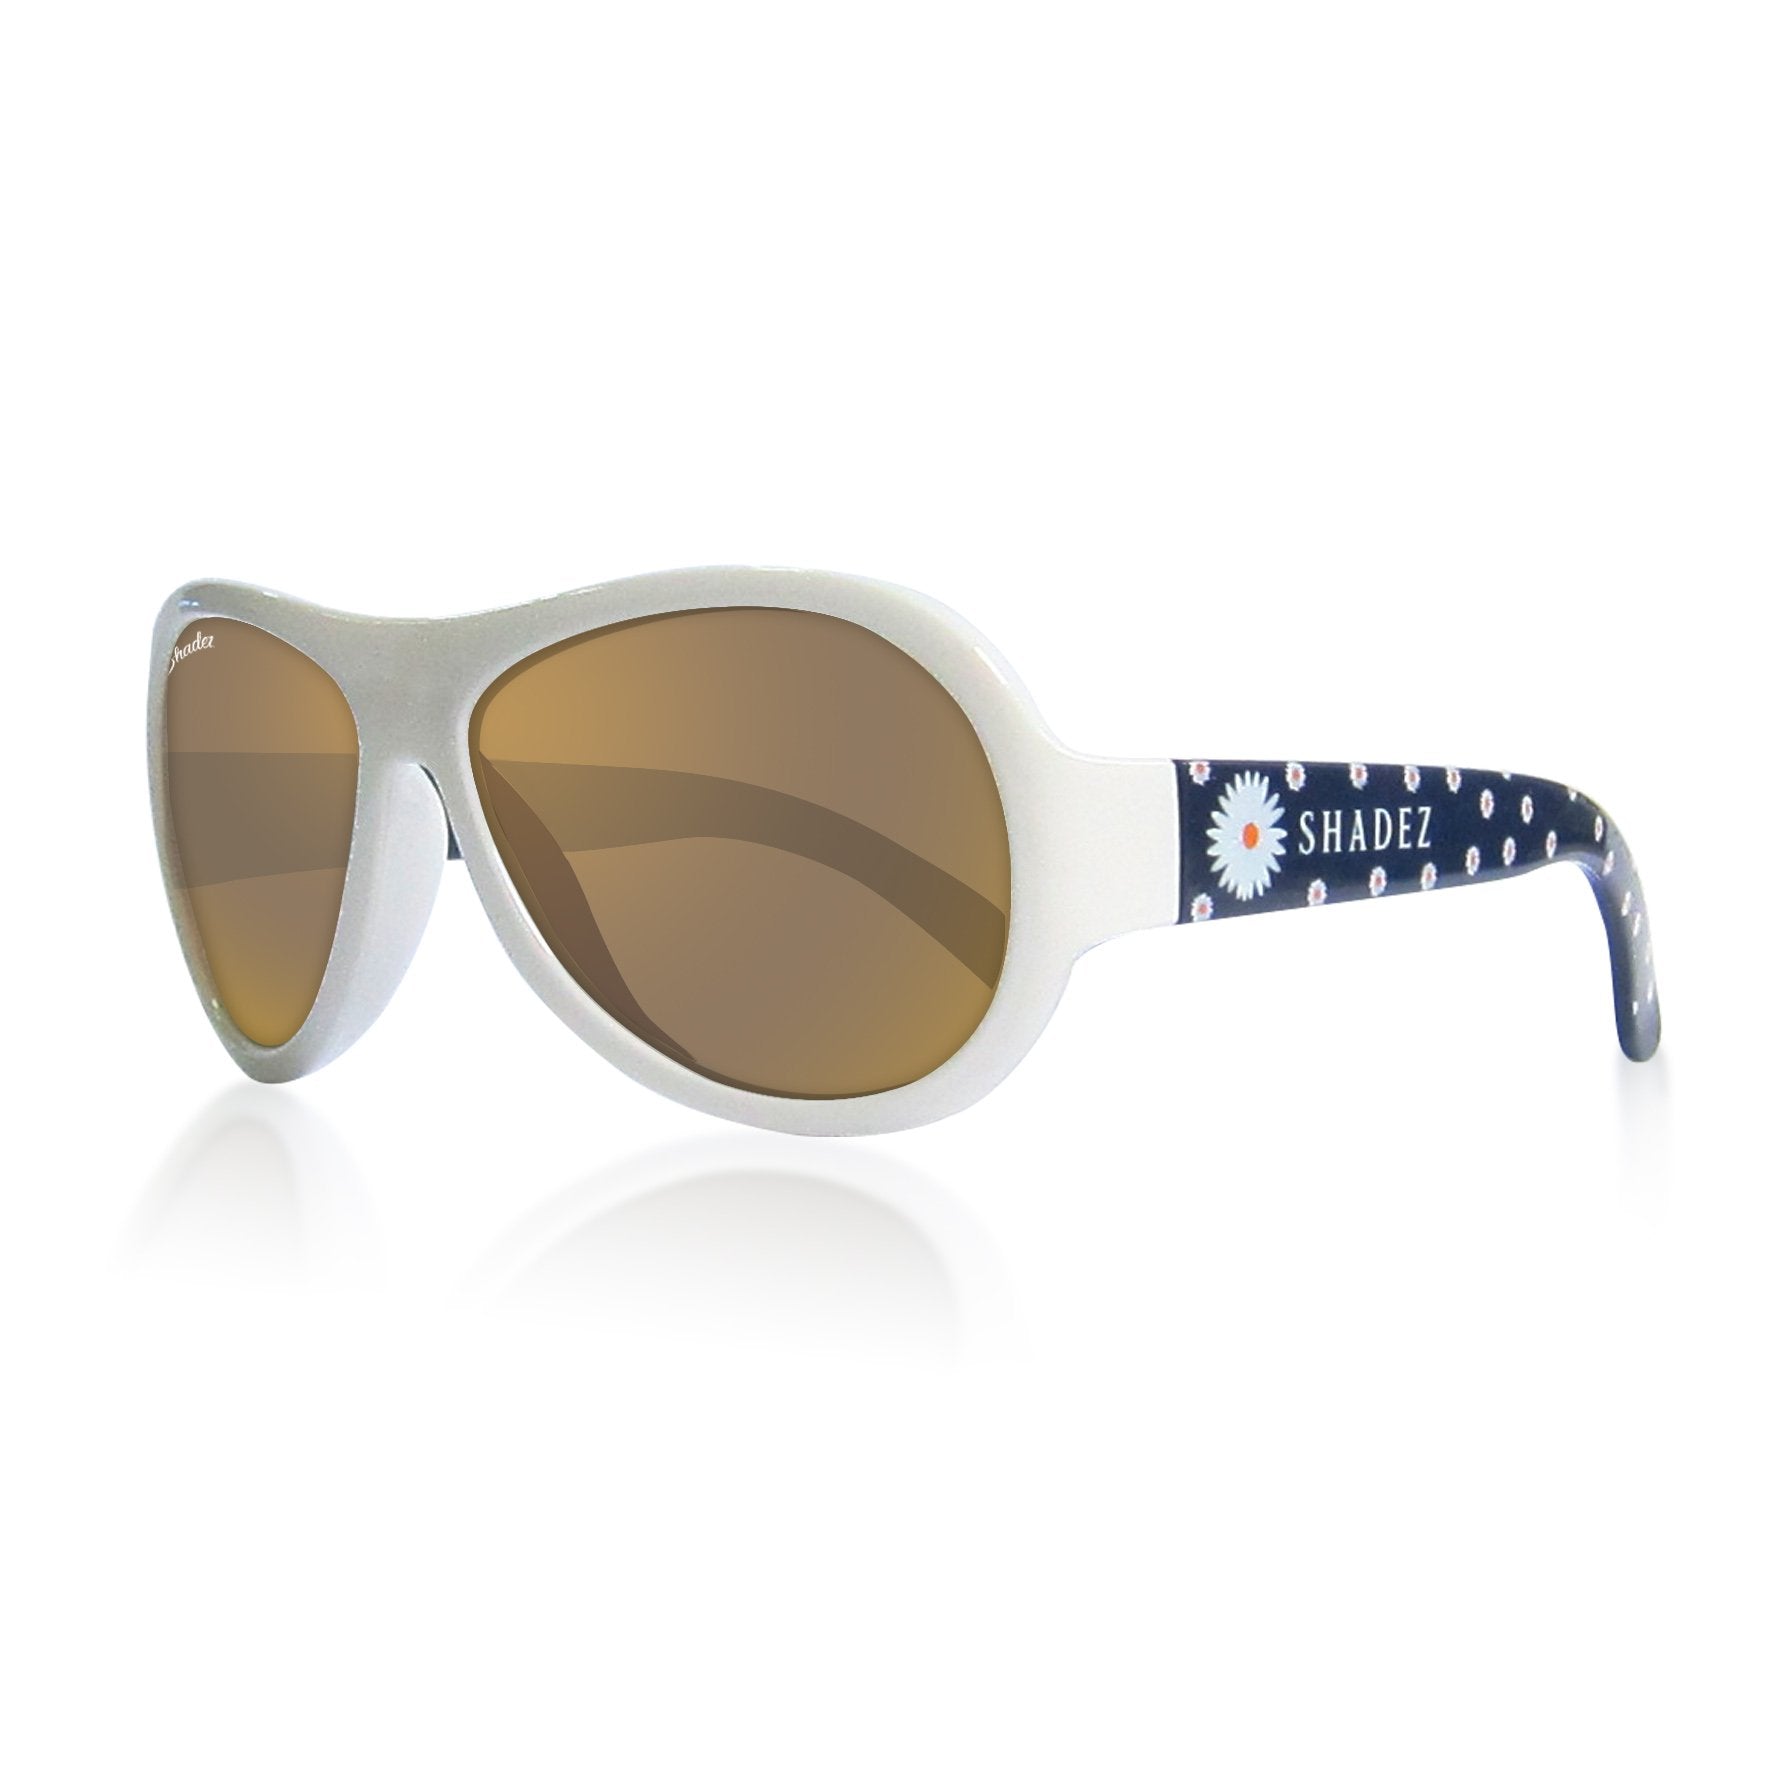 SHADEZ Kids Sunglasses Designers Pop Daisy Navy